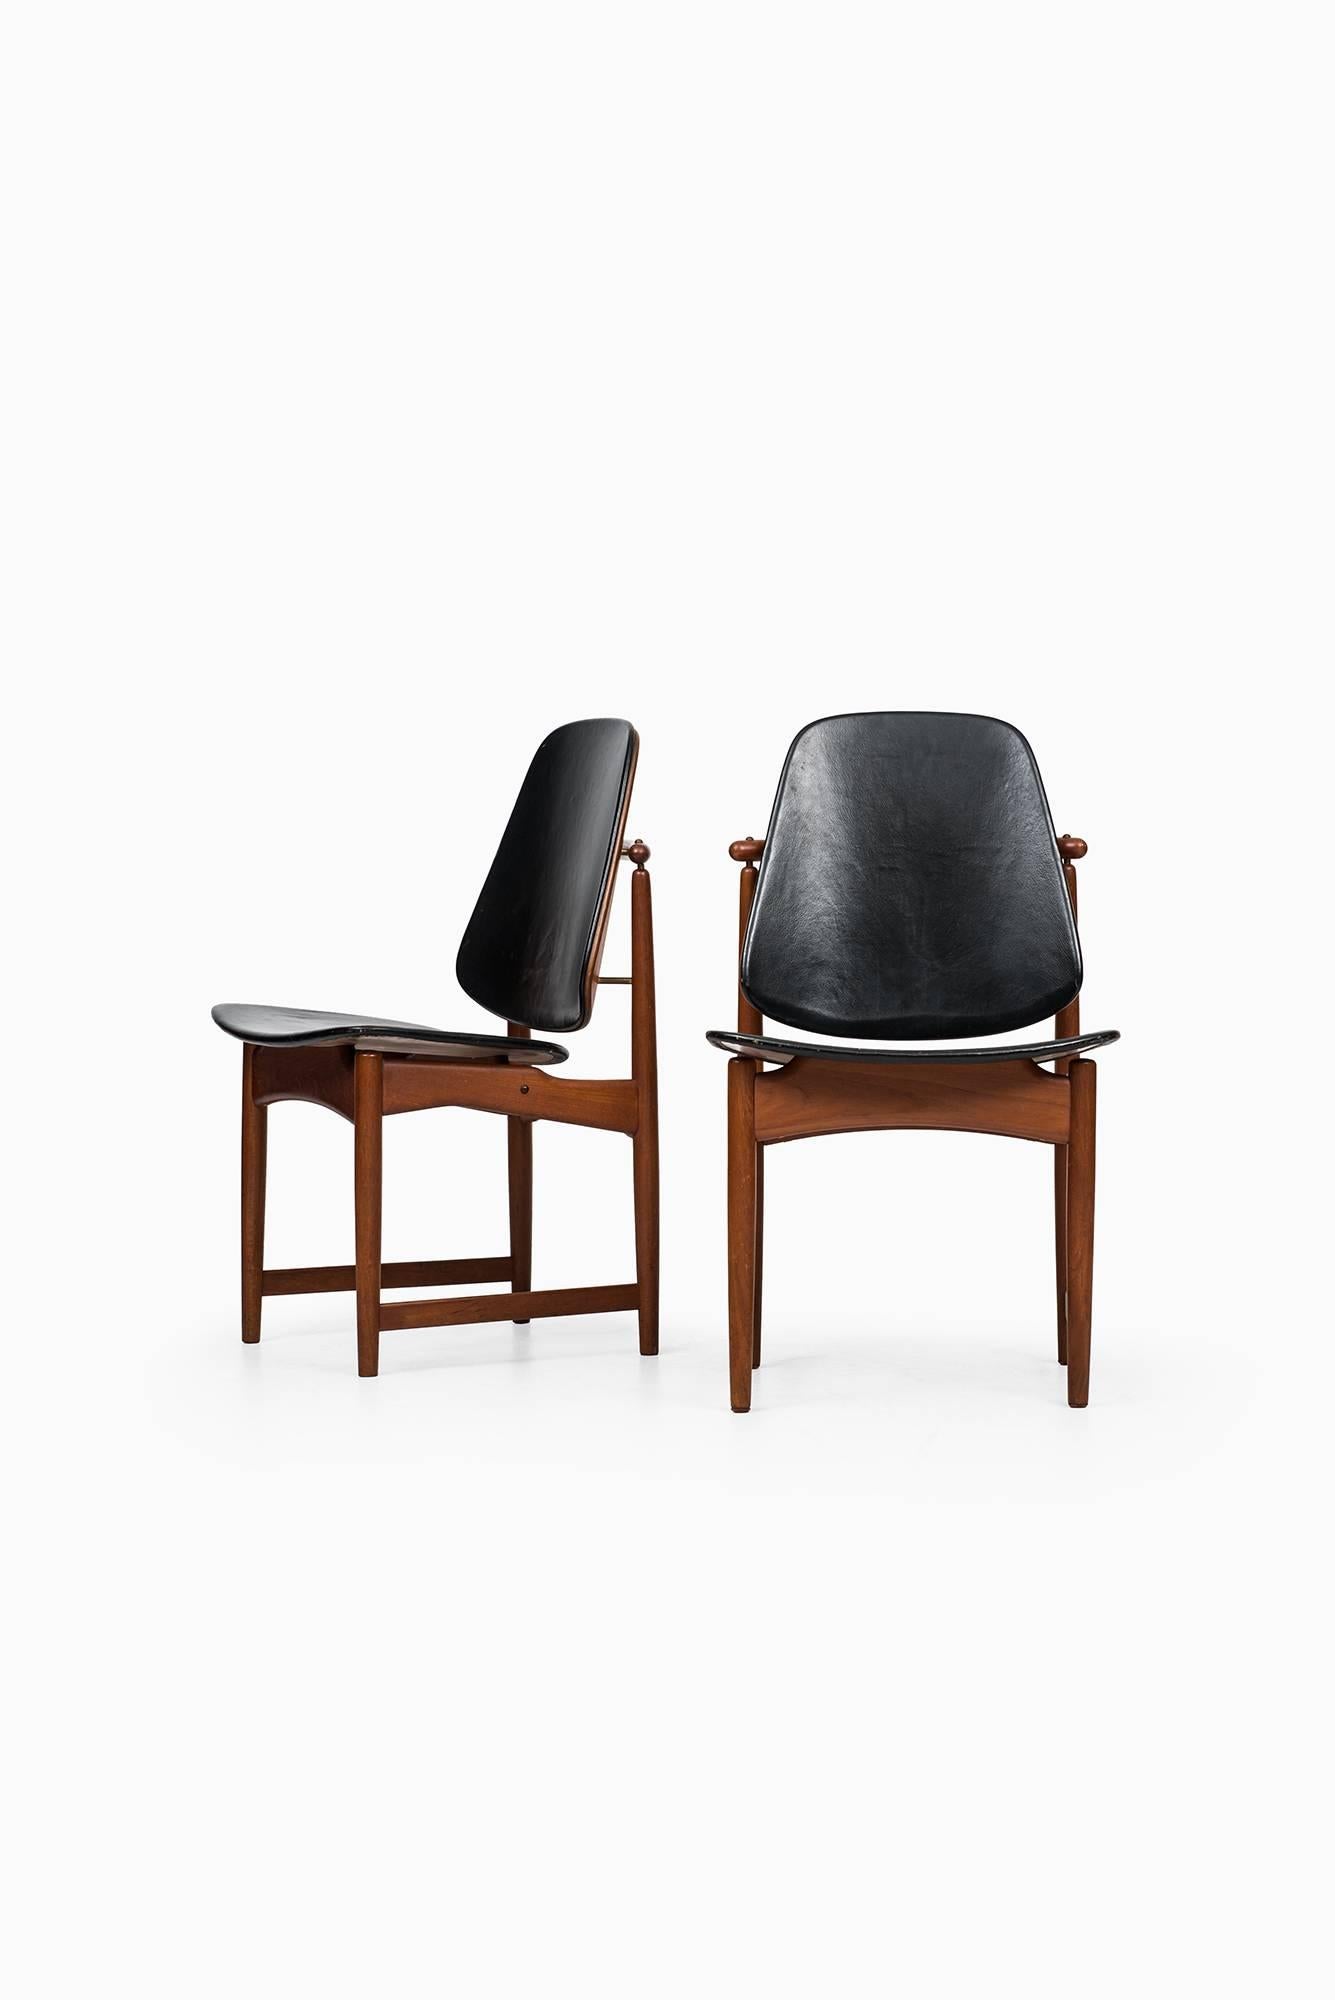 Rare set of eight dining chairs designed by Arne Hovmand-Olsen. Produced by Onsild Møbelfabrik for Jutex, Århus in Denmark.